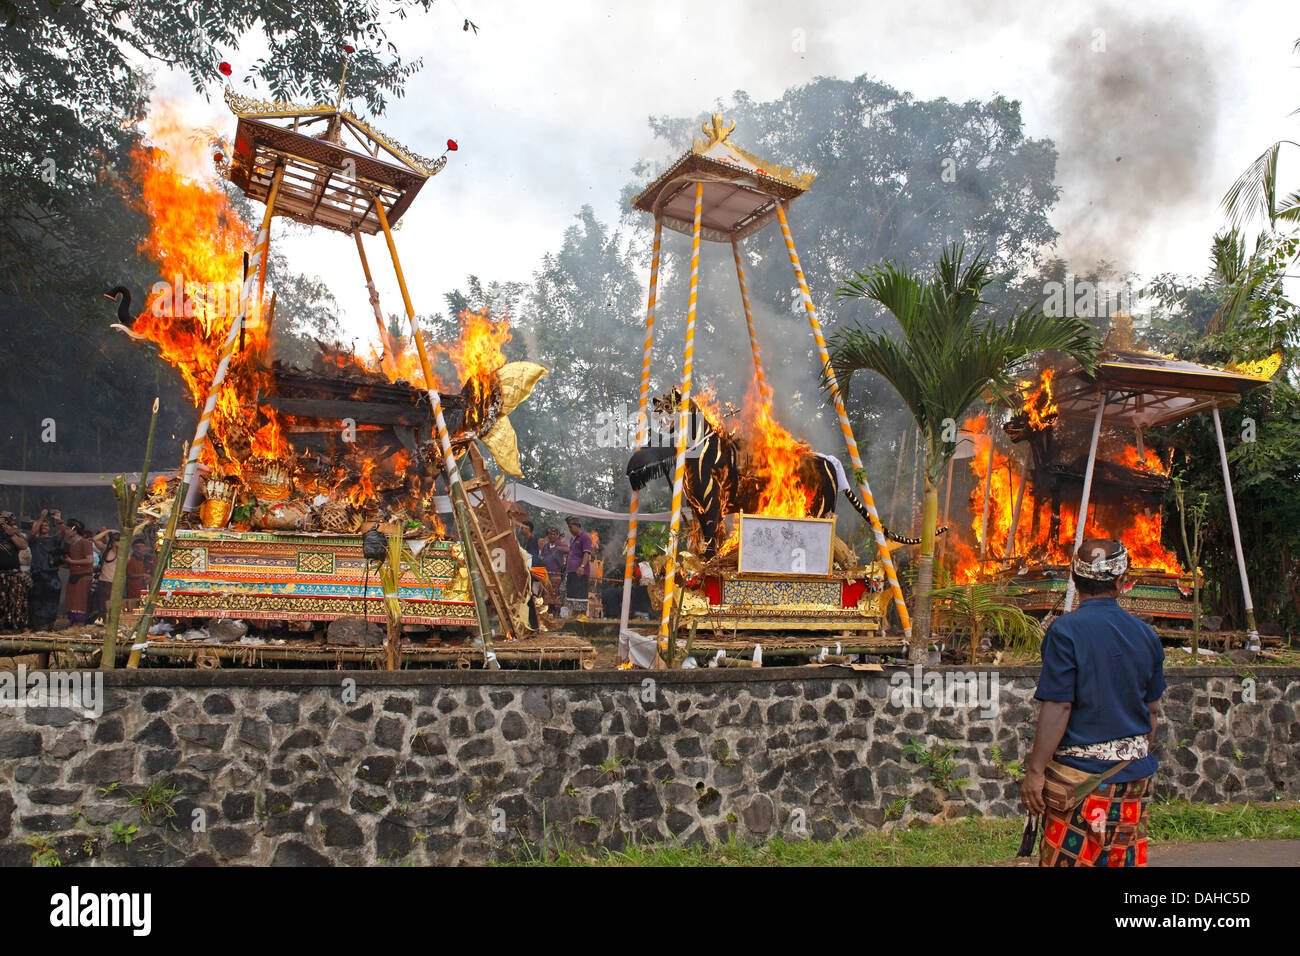 Fiamme dalla combustione tori a una massa indù cerimonia di cremazione, Ubud. Bali, Indonesia. Foto Stock